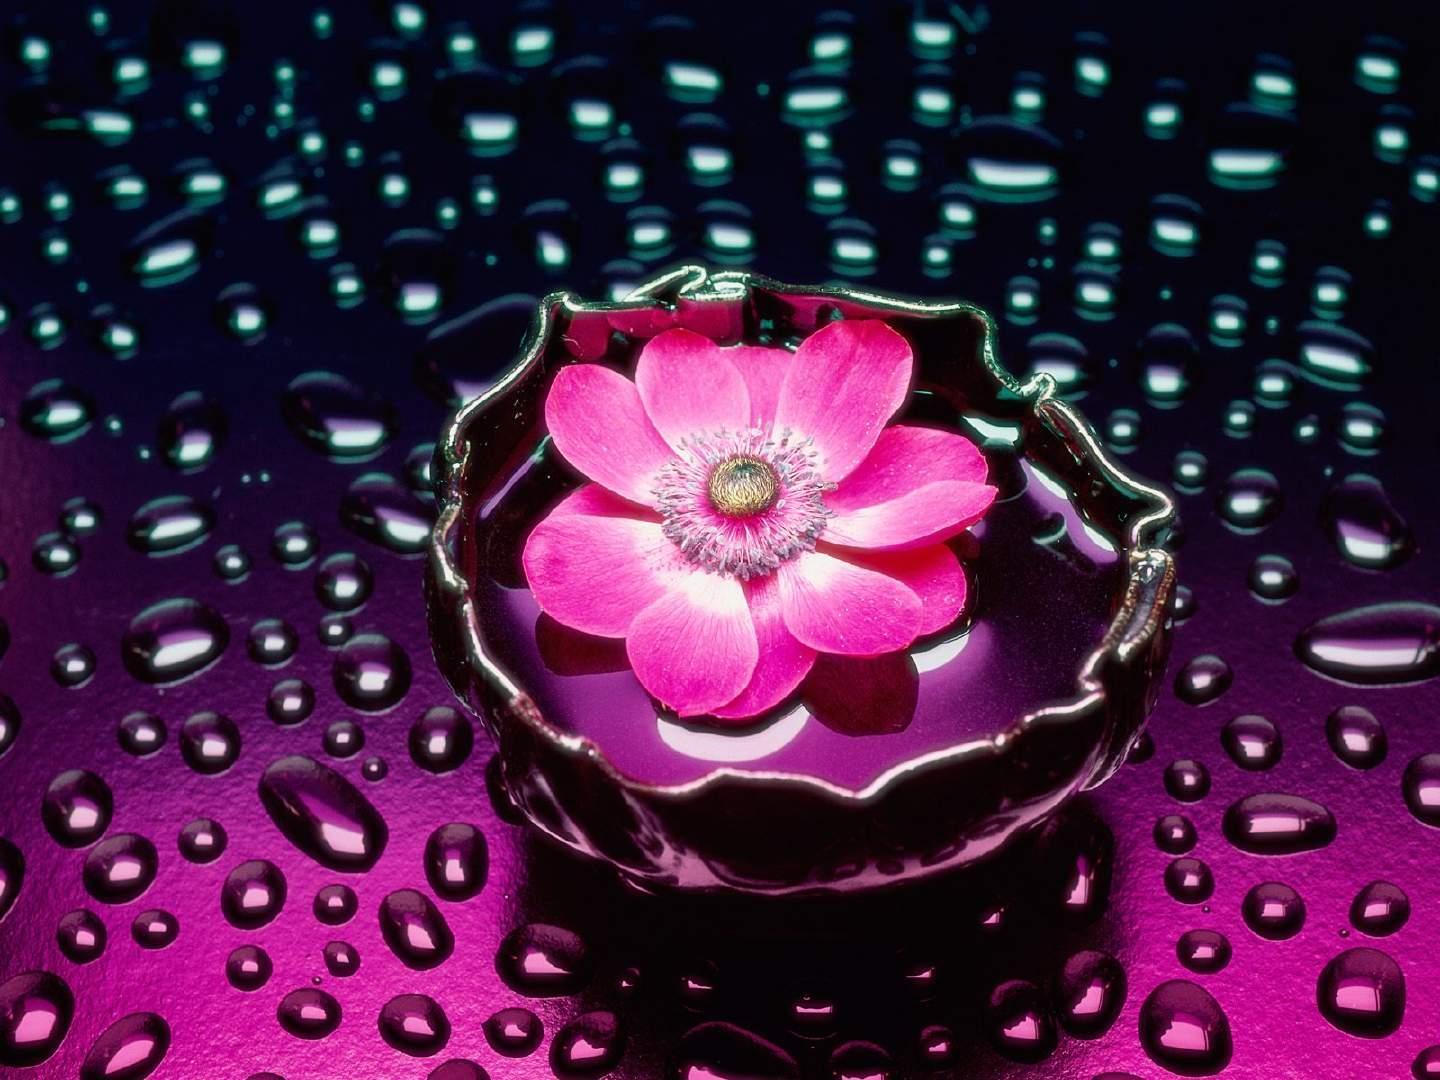 Pink flower with drops HD wallpaper free desktop background